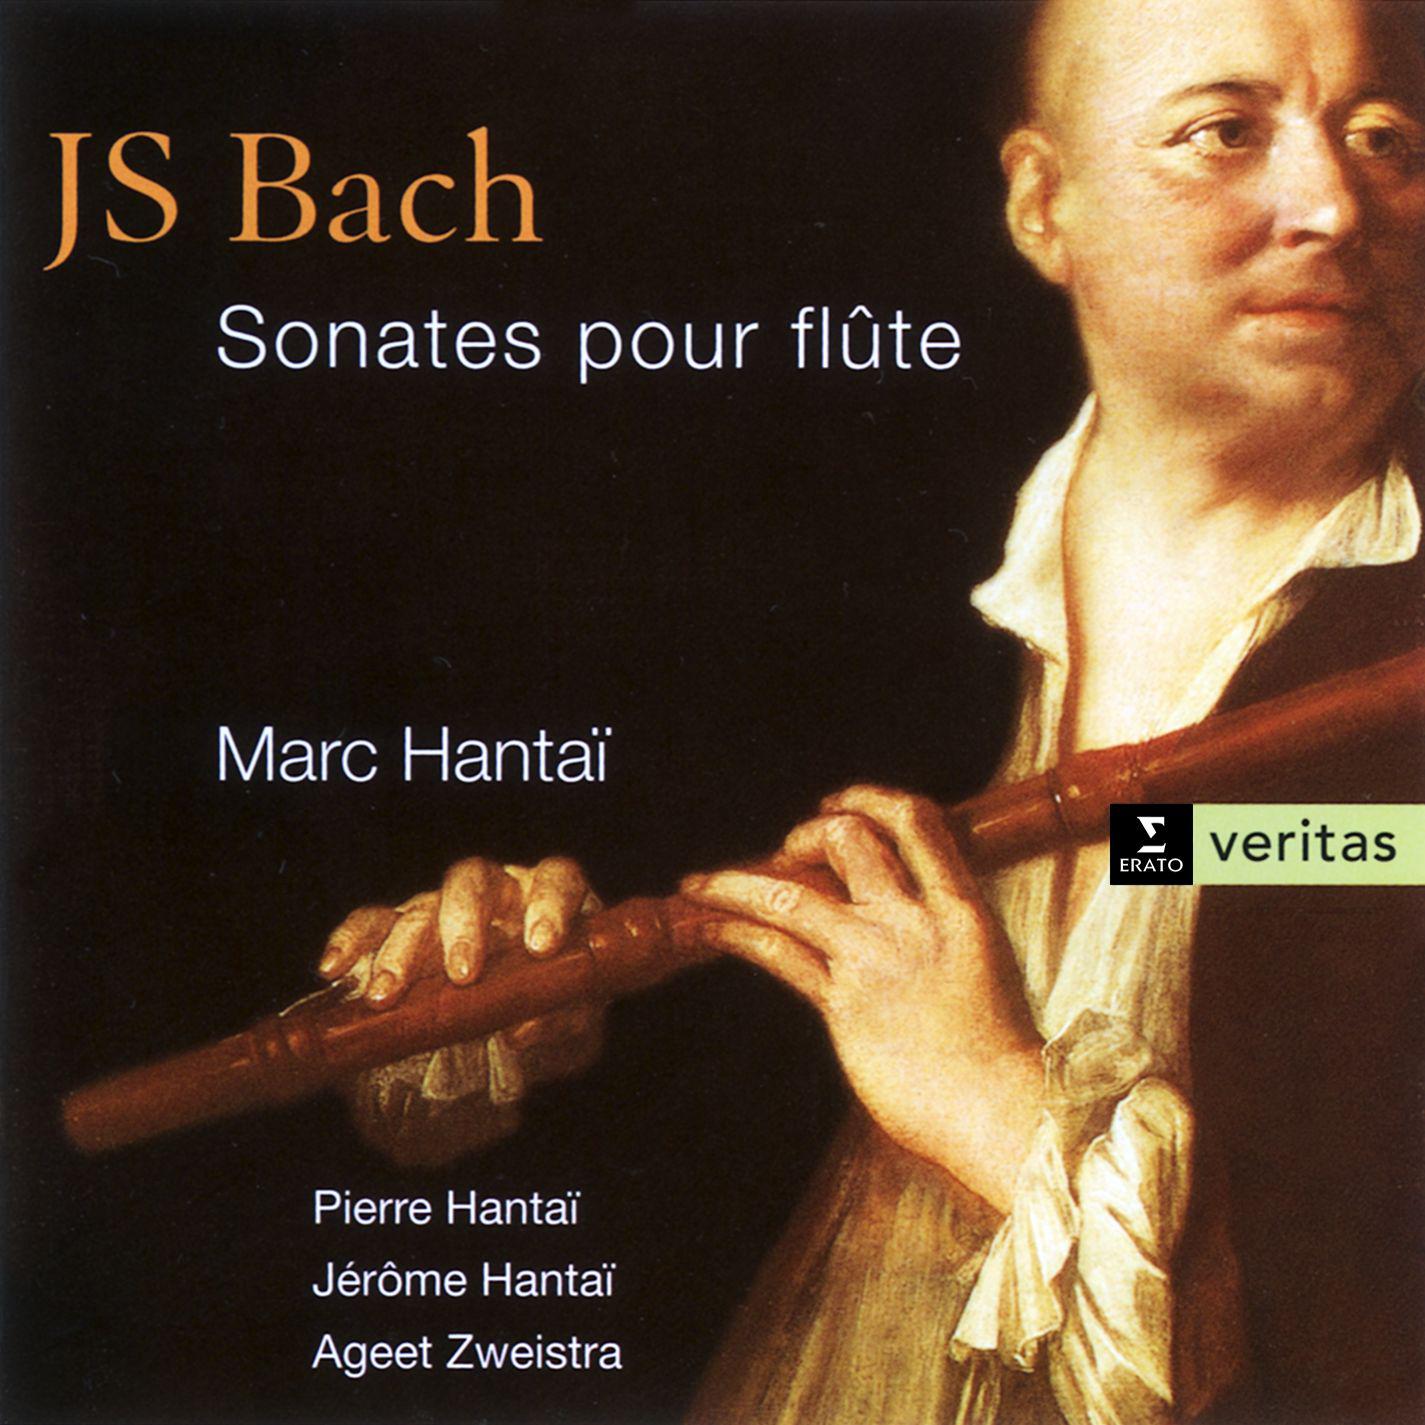 Sonata in B minor for Flute and Harpsichord BWV1030: II. Largo e dolce